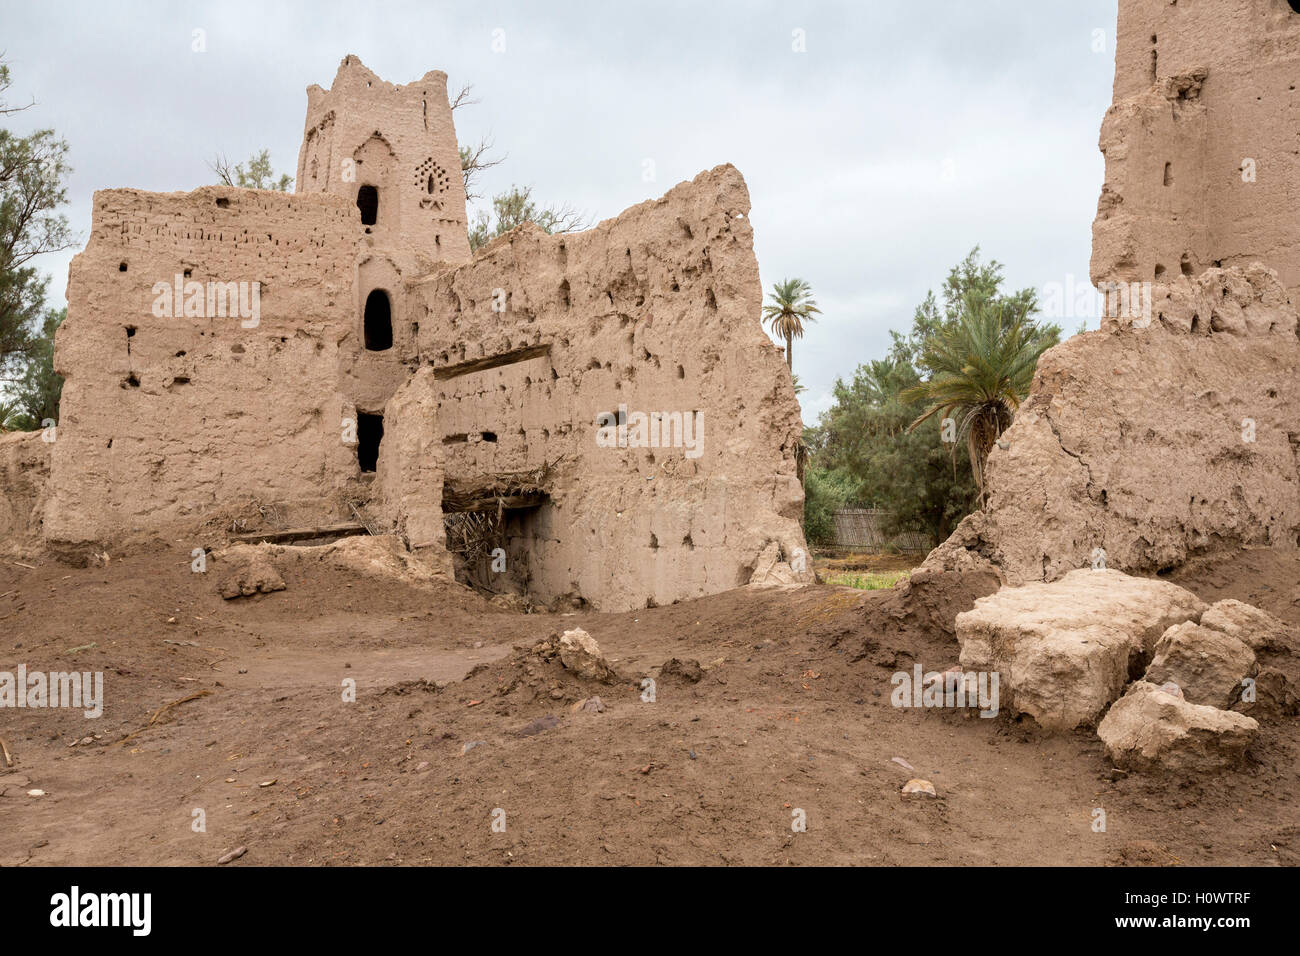 Skoura, Marocco. Un Kasbah abbandonate lentamente cadendo in rovina. Foto Stock